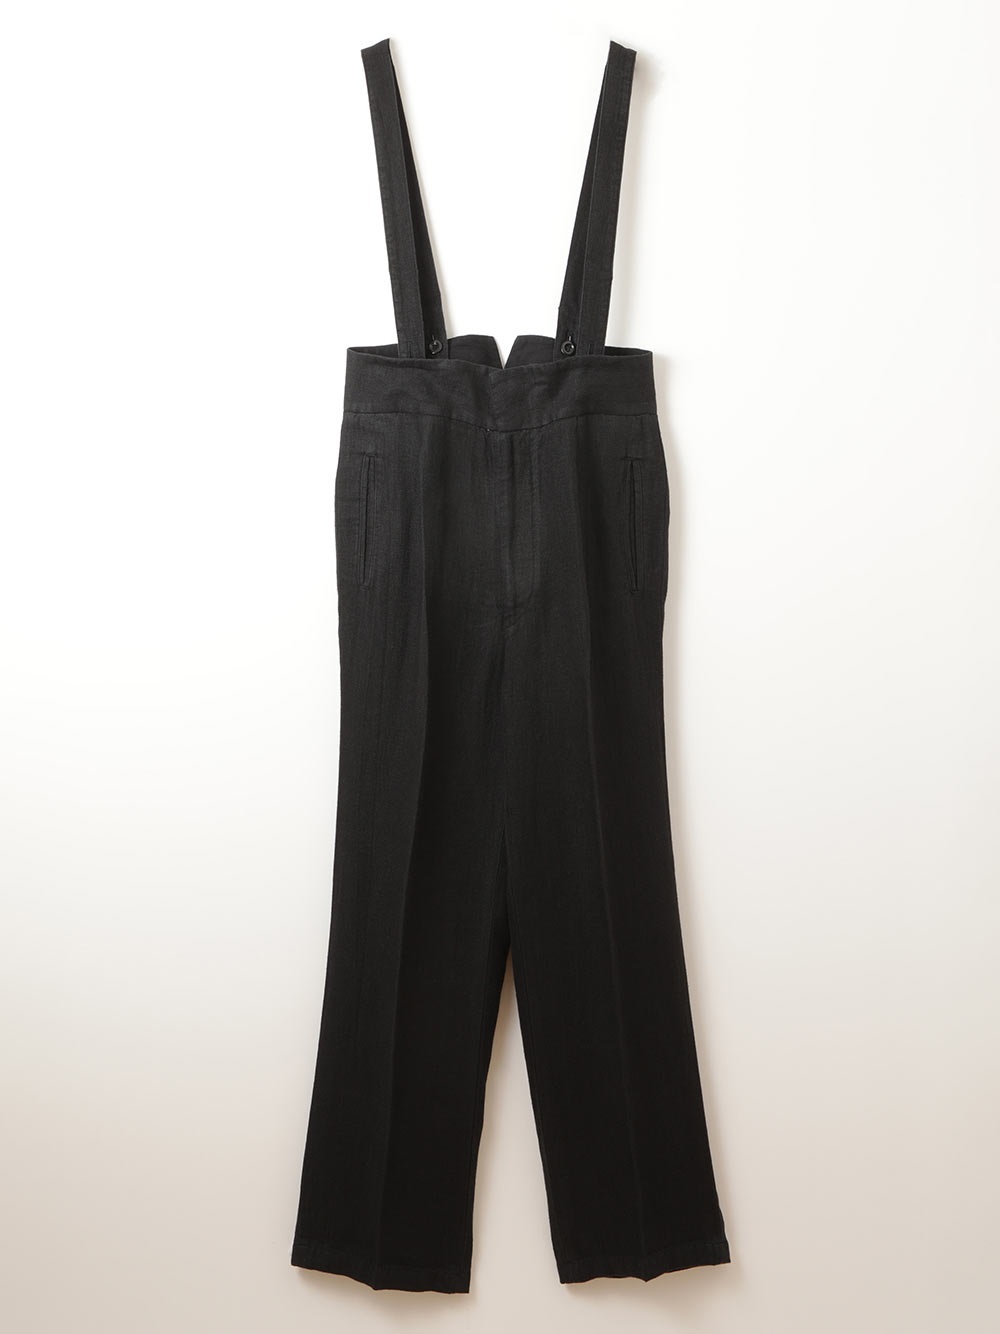 Suspender Pants(00ブラック-１)